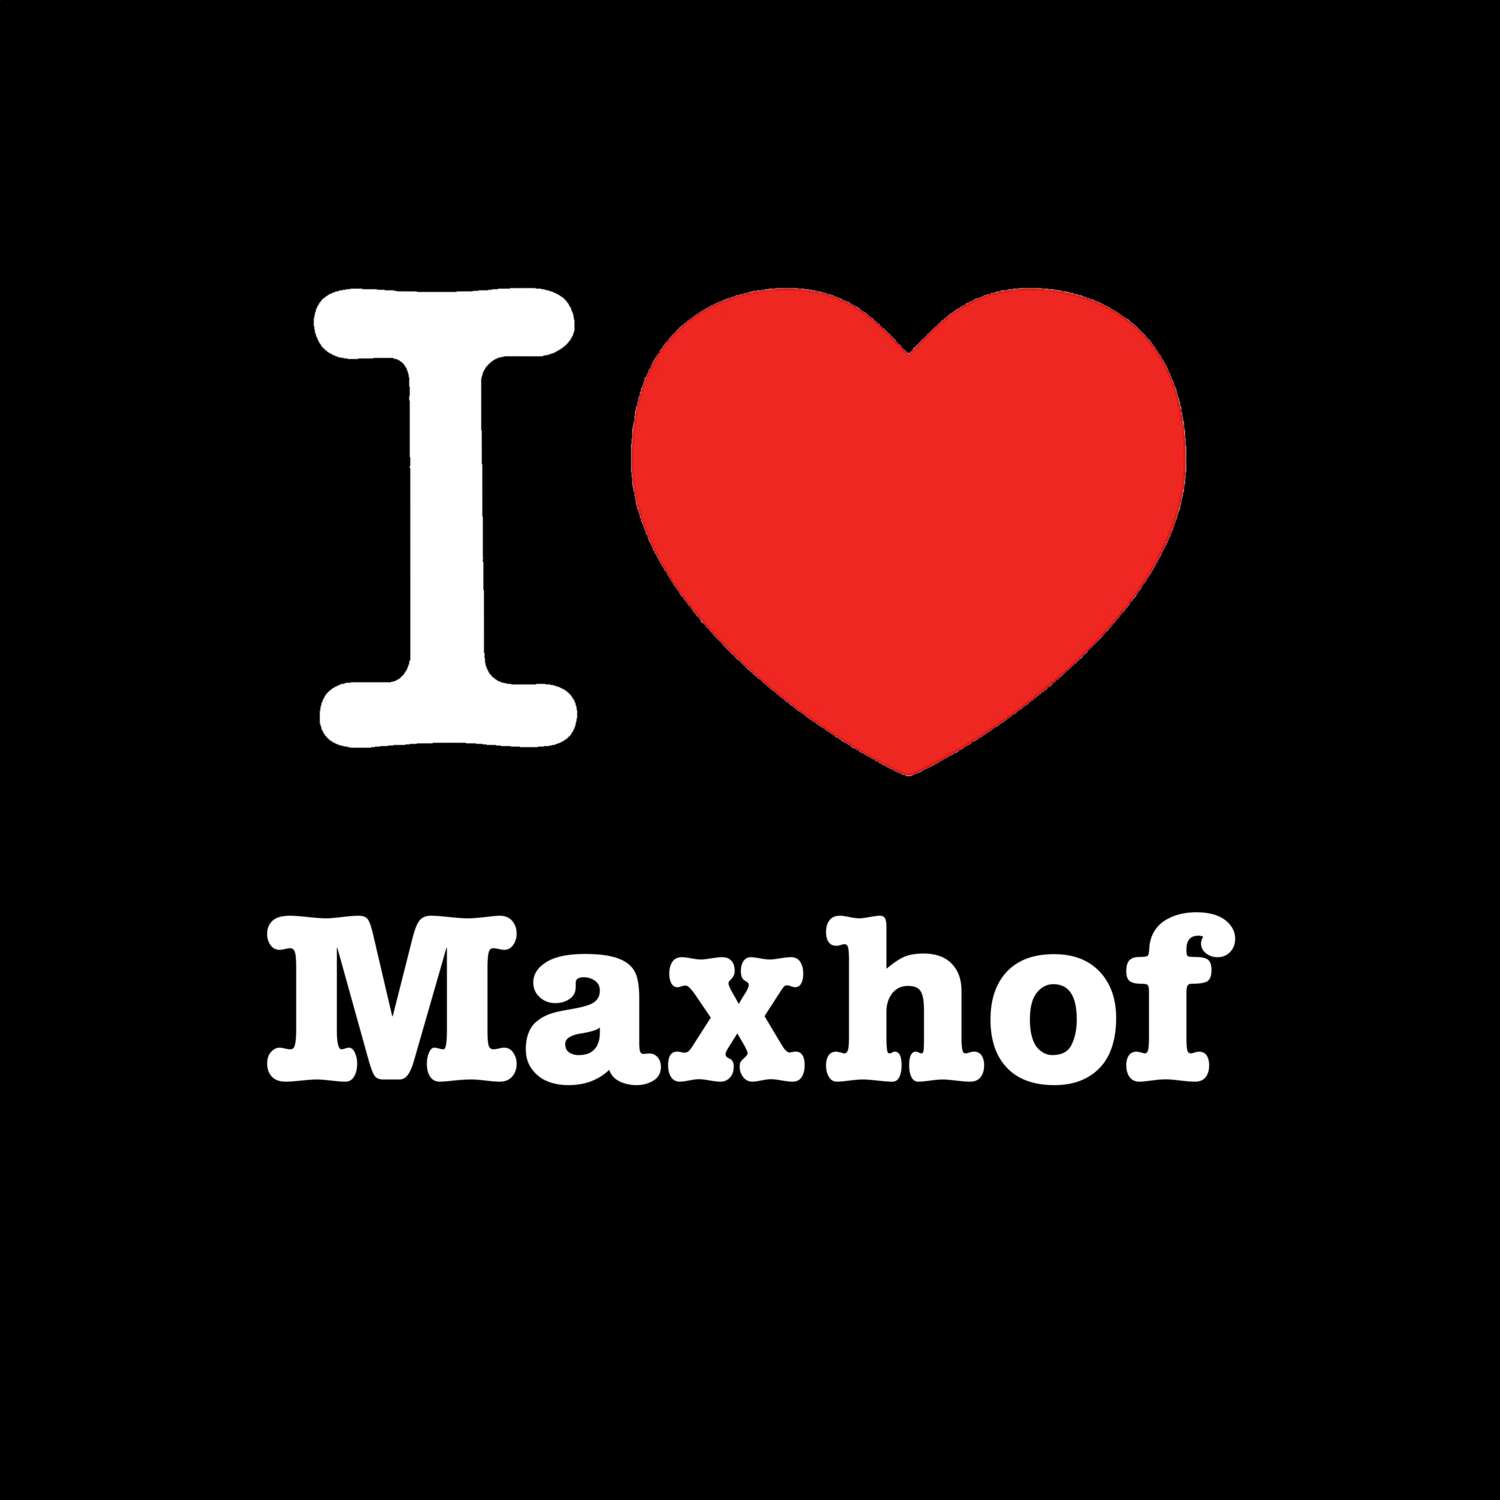 Maxhof T-Shirt »I love«